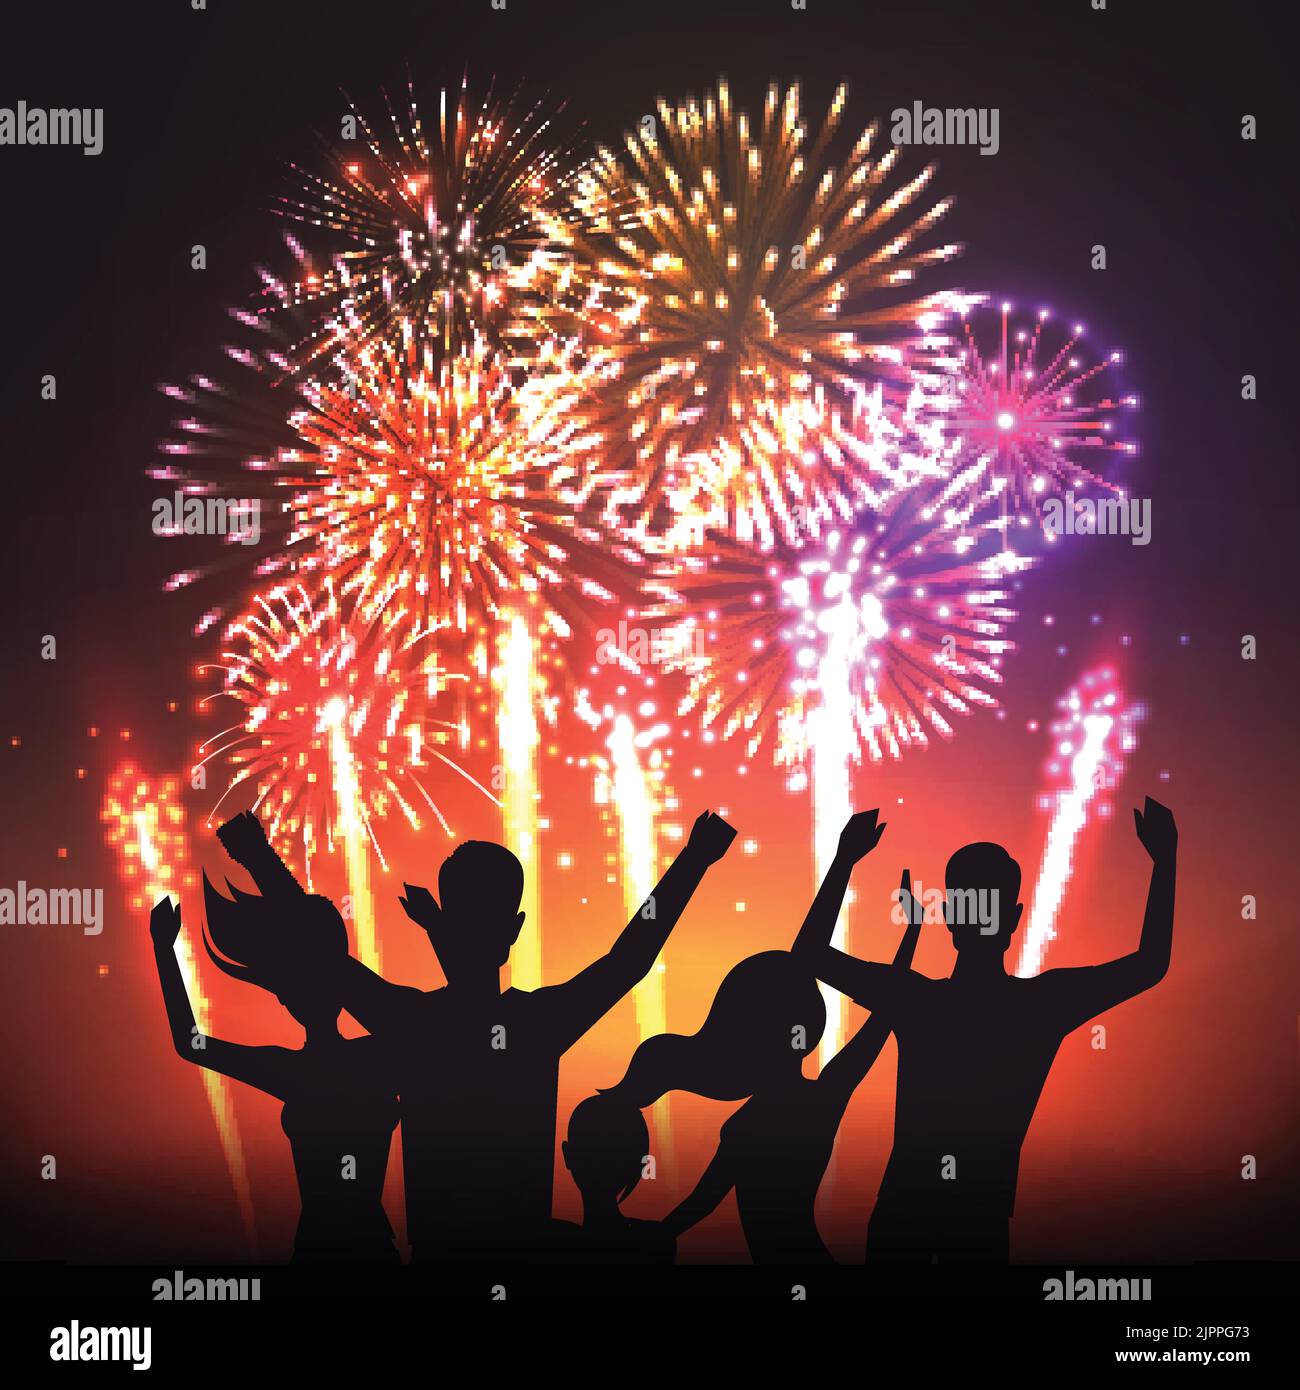 Celebrating people black silhouettes against sparkling lights of bursting into sky fireworks balls banner abstract vector illustration Stock Vector